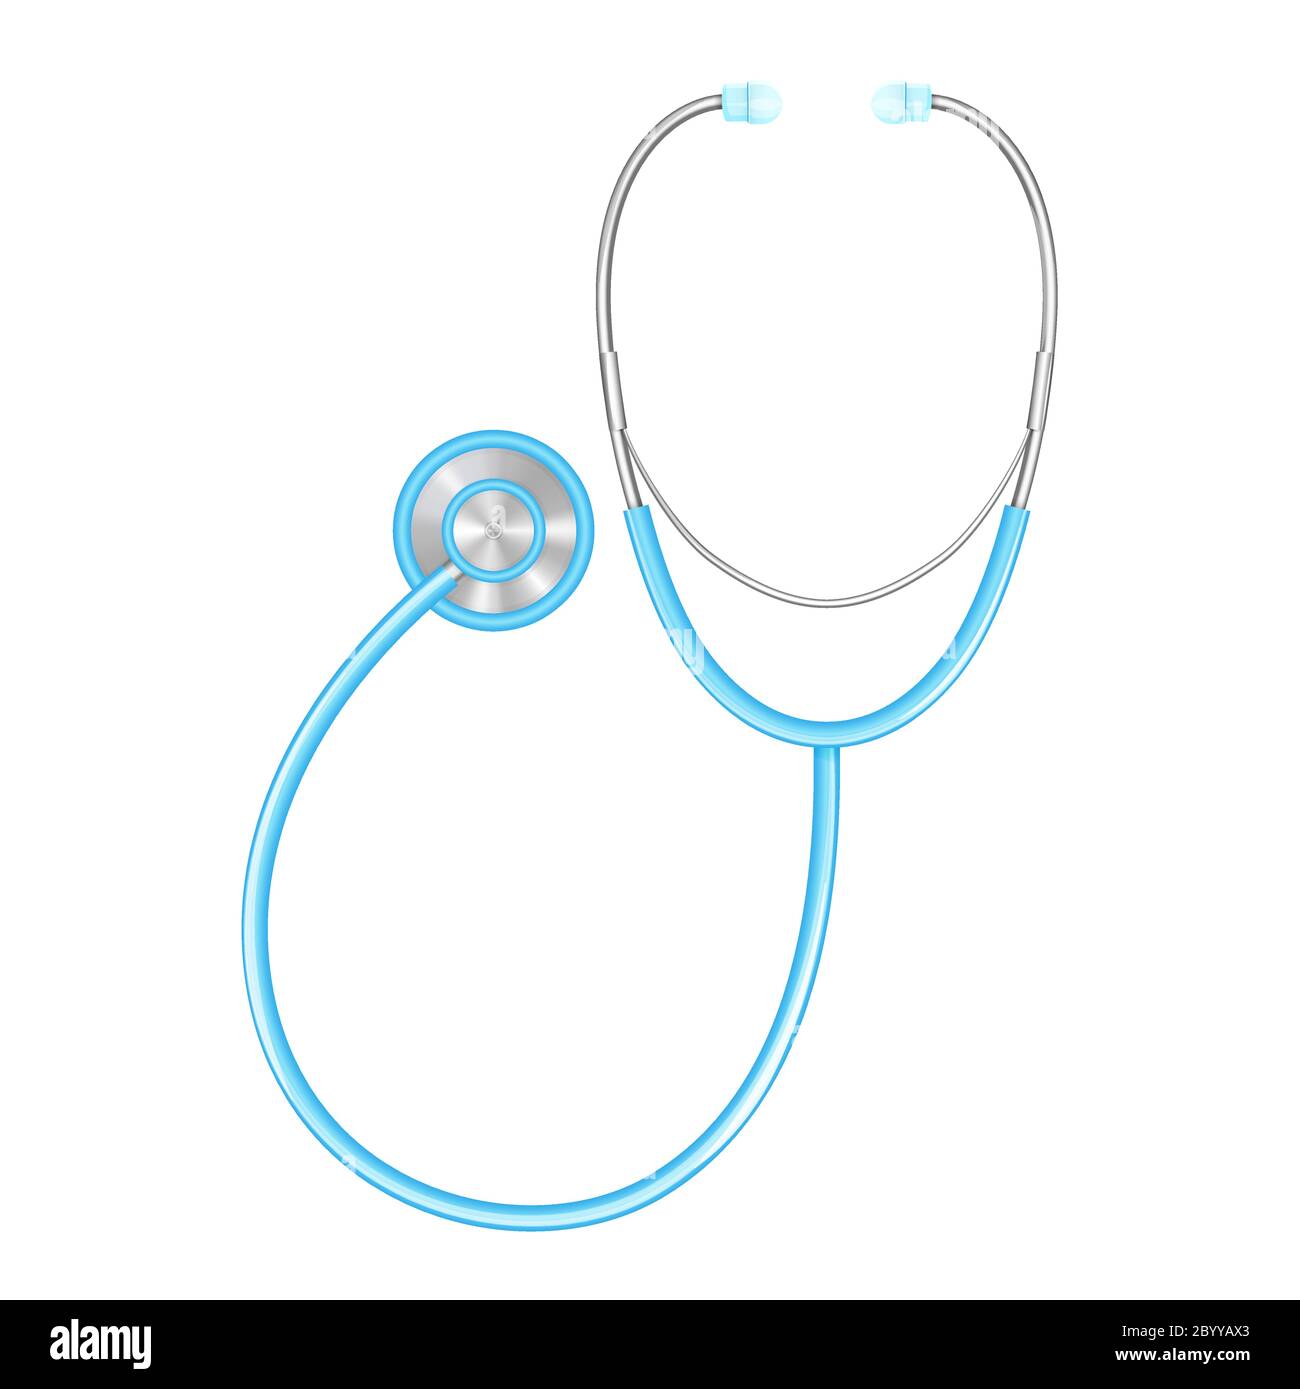 Realistic medical equipment, blue stethoscope isolated on white background. Medical stethoscope vector illustration Stock Vector